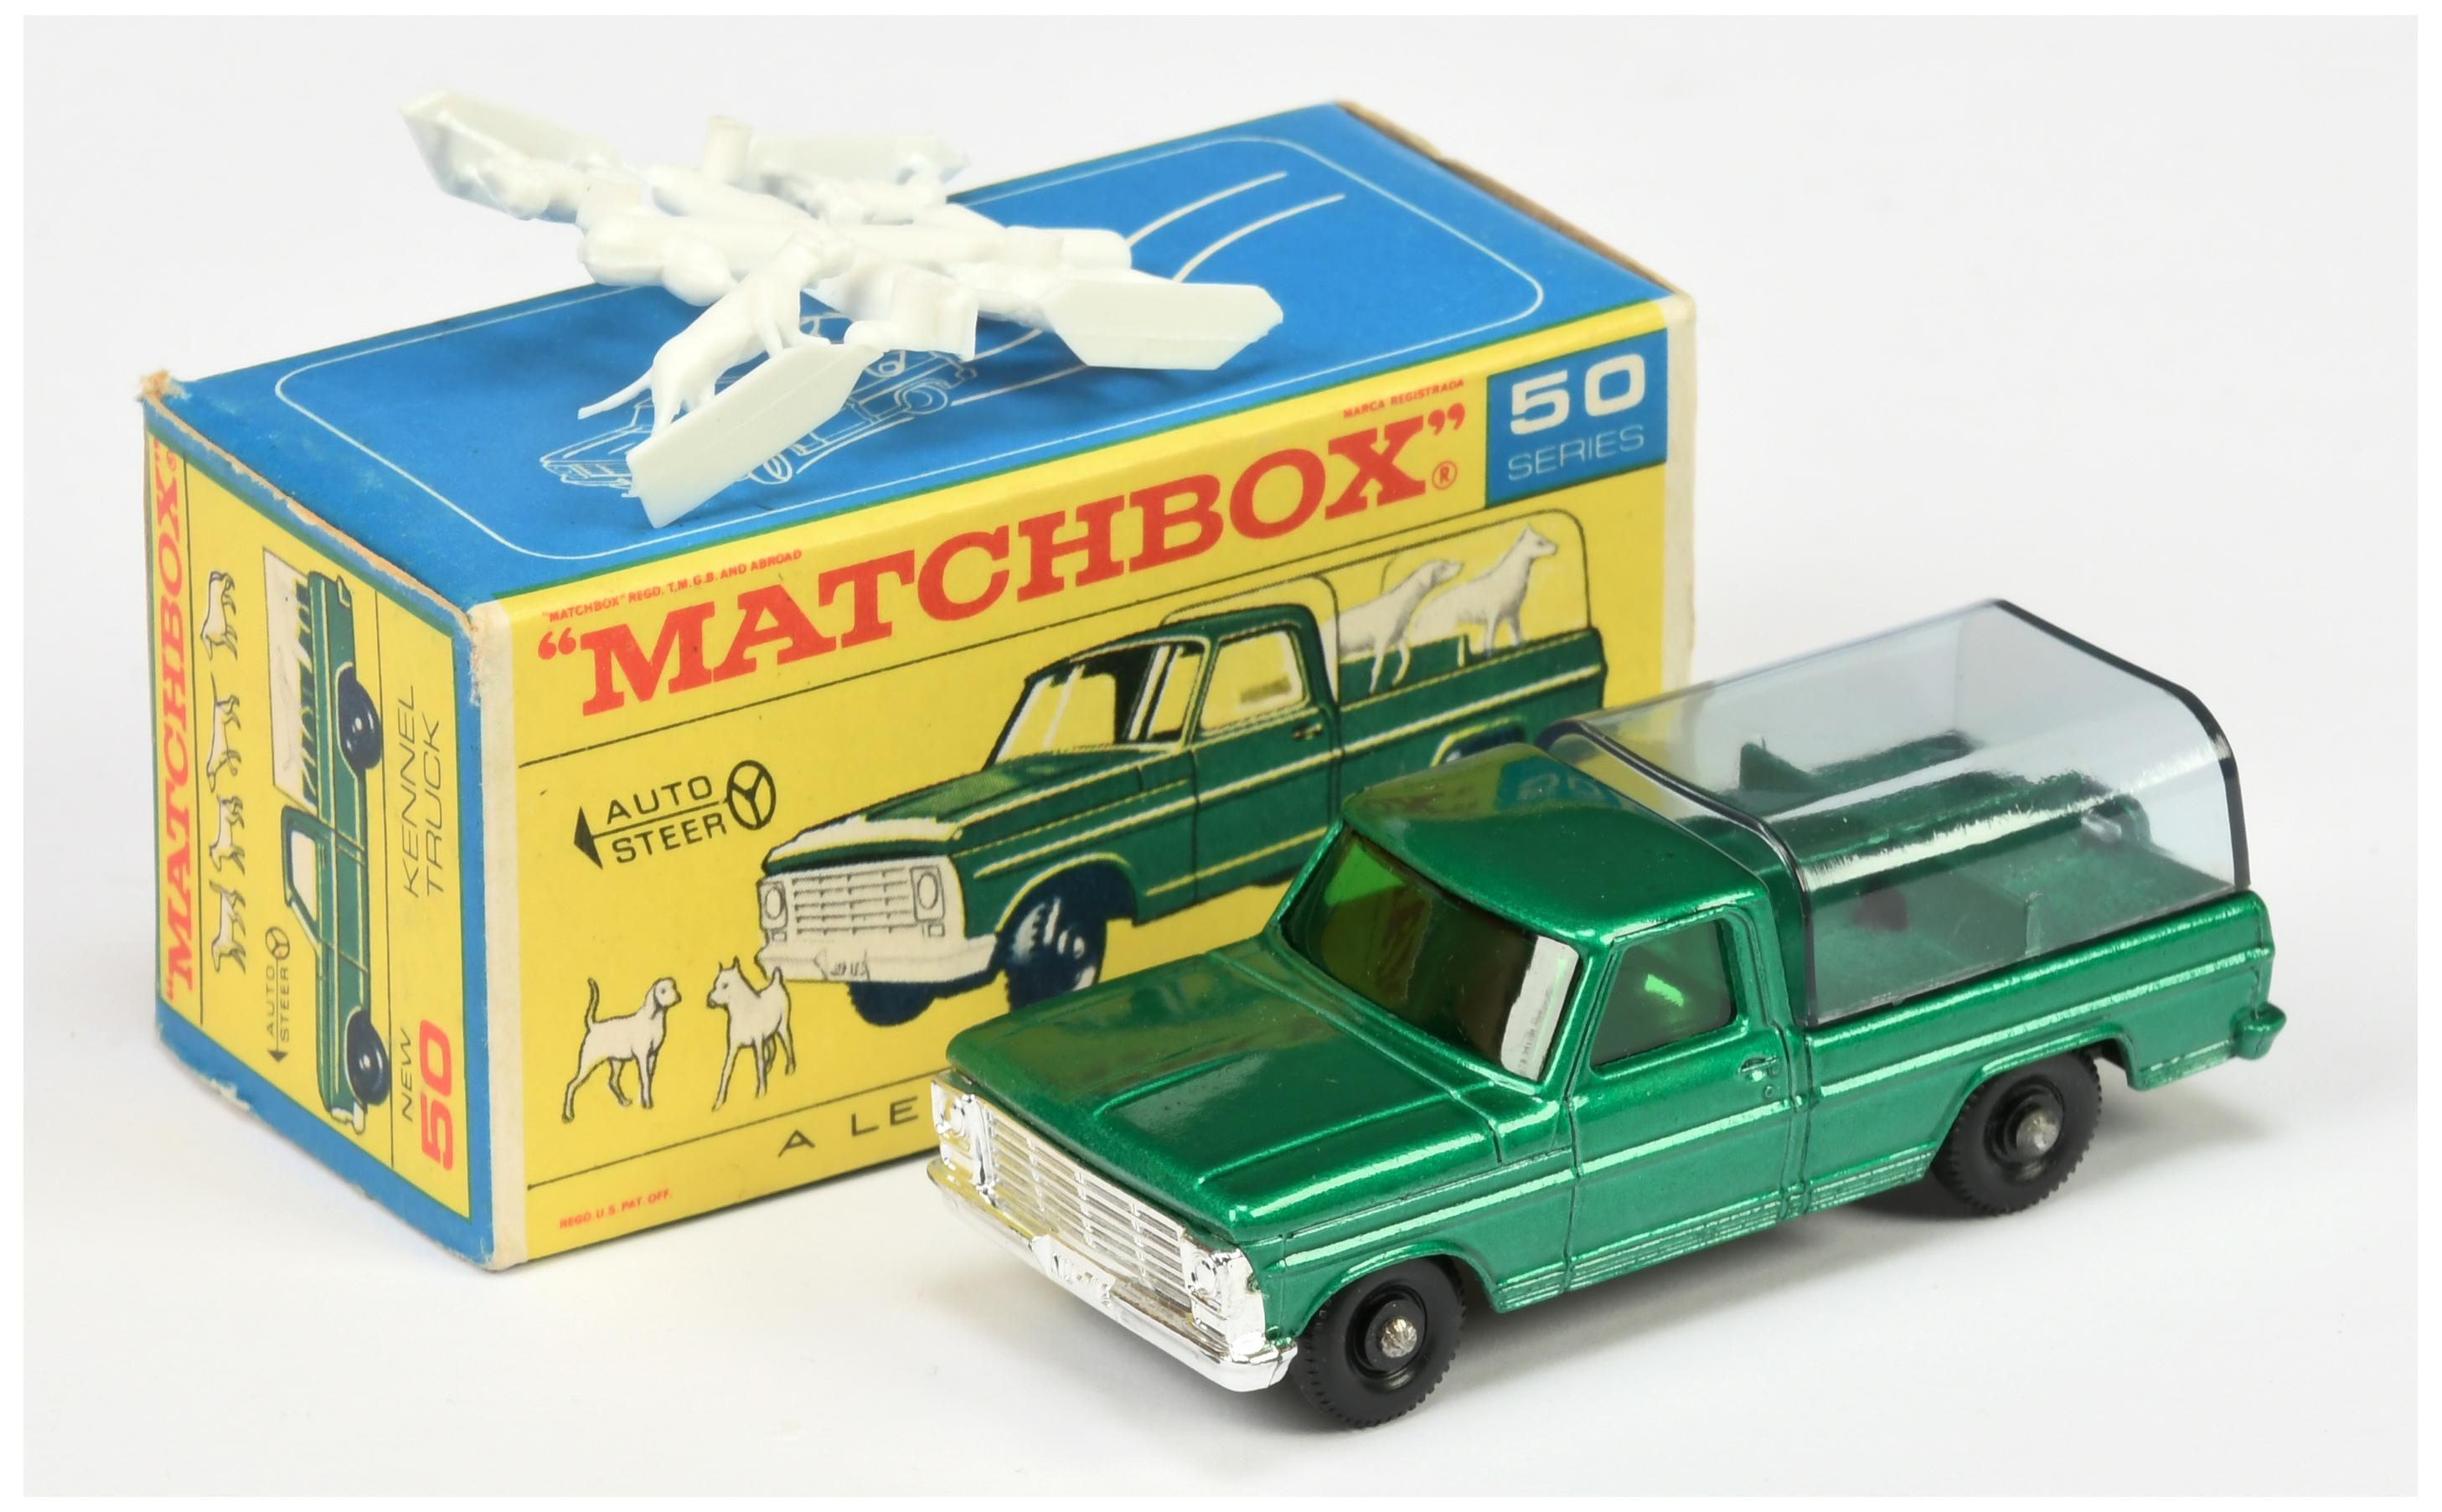 Matchbox Regular Wheels 50c Ford Kennel Truck - metallic green body with textured loadbed, chrome...